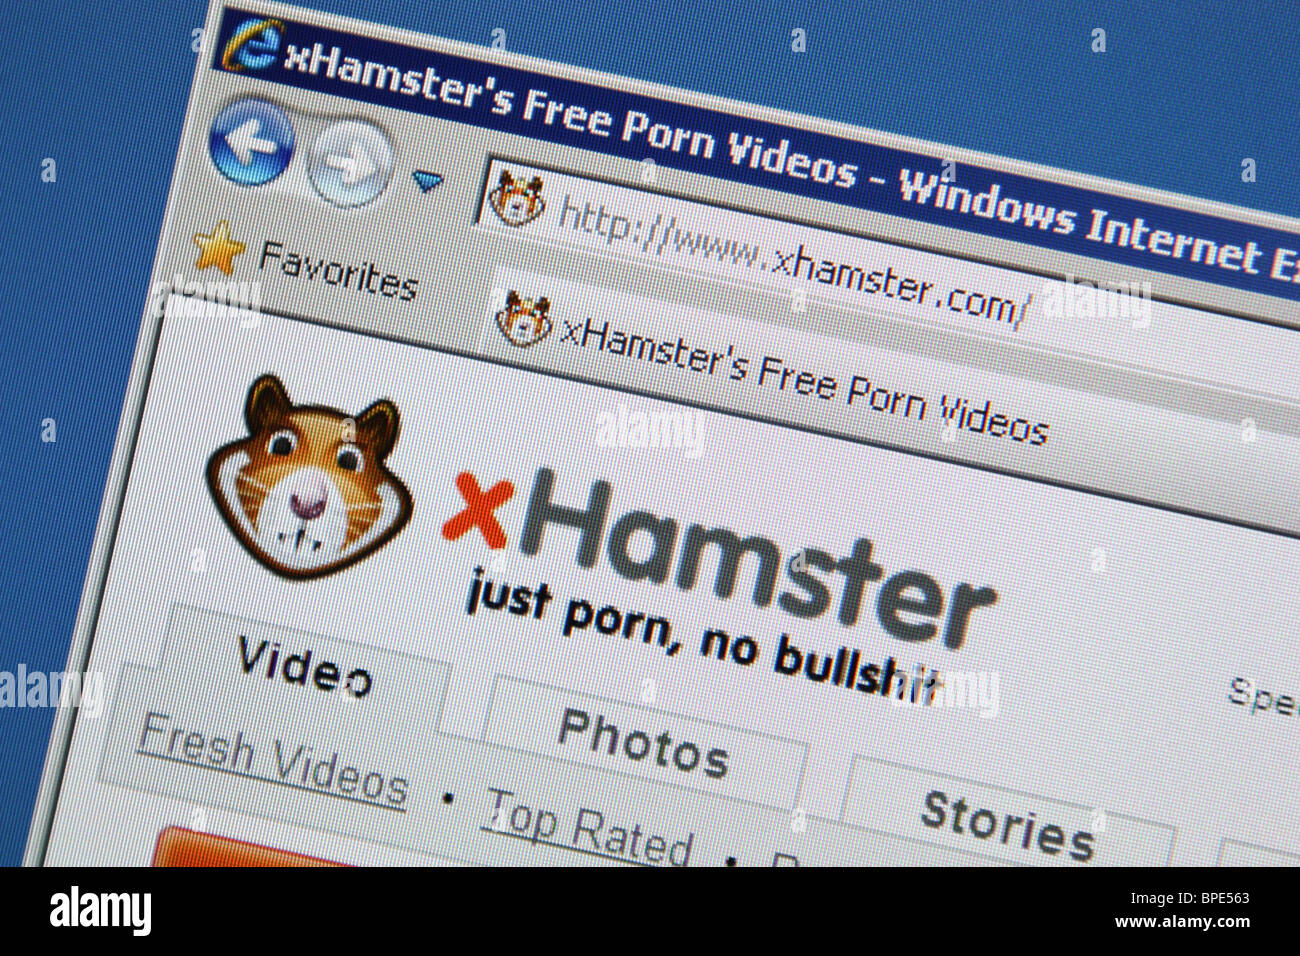 xhamster porn adult video online Stock Photo - Alamy